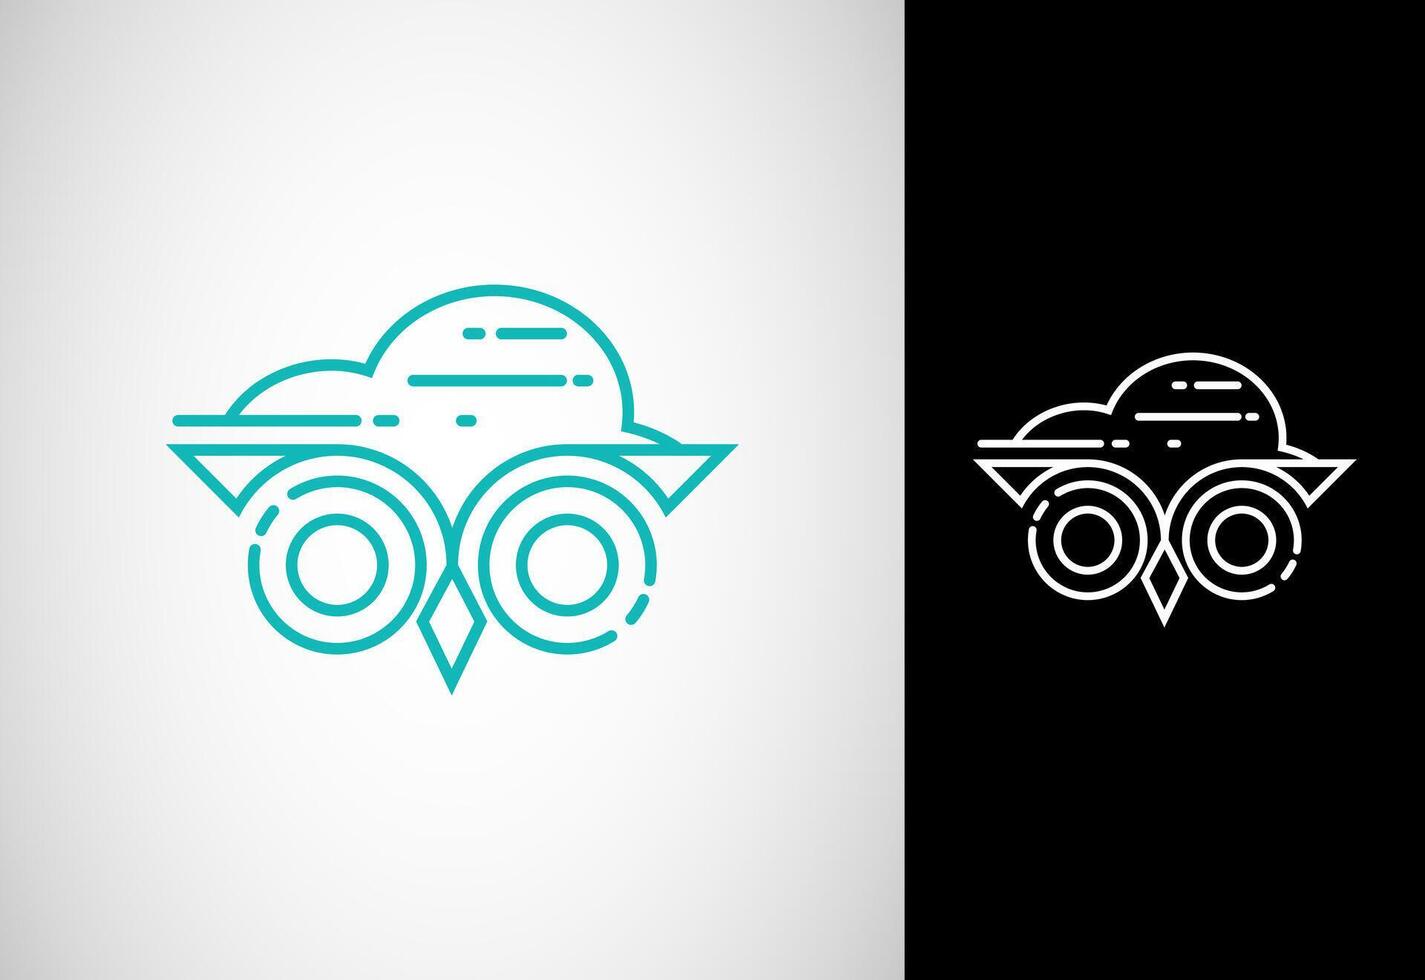 gufo occhi nube logo design vettore illustrazione. gufo e nube design vettore